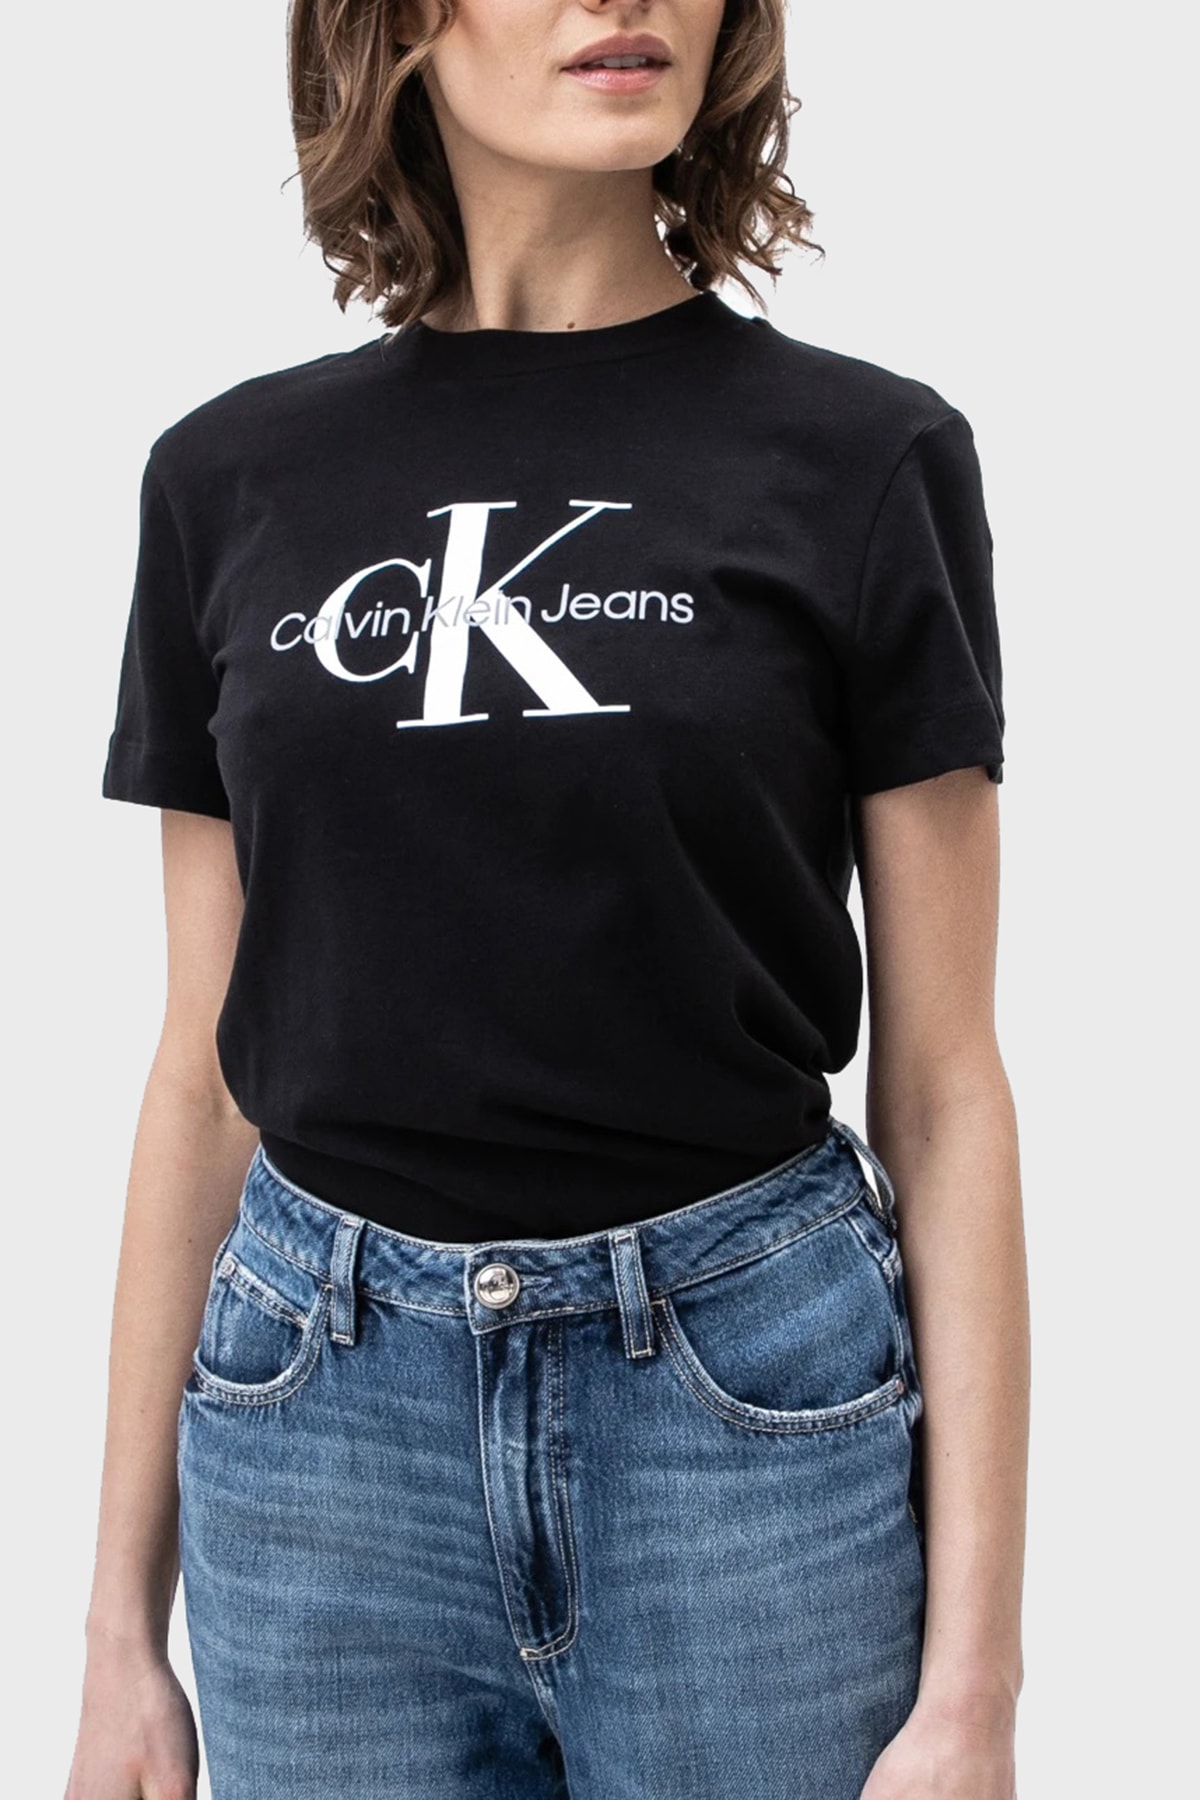 Calvin Klein T-Shirt - Black - Regular fit - Trendyol